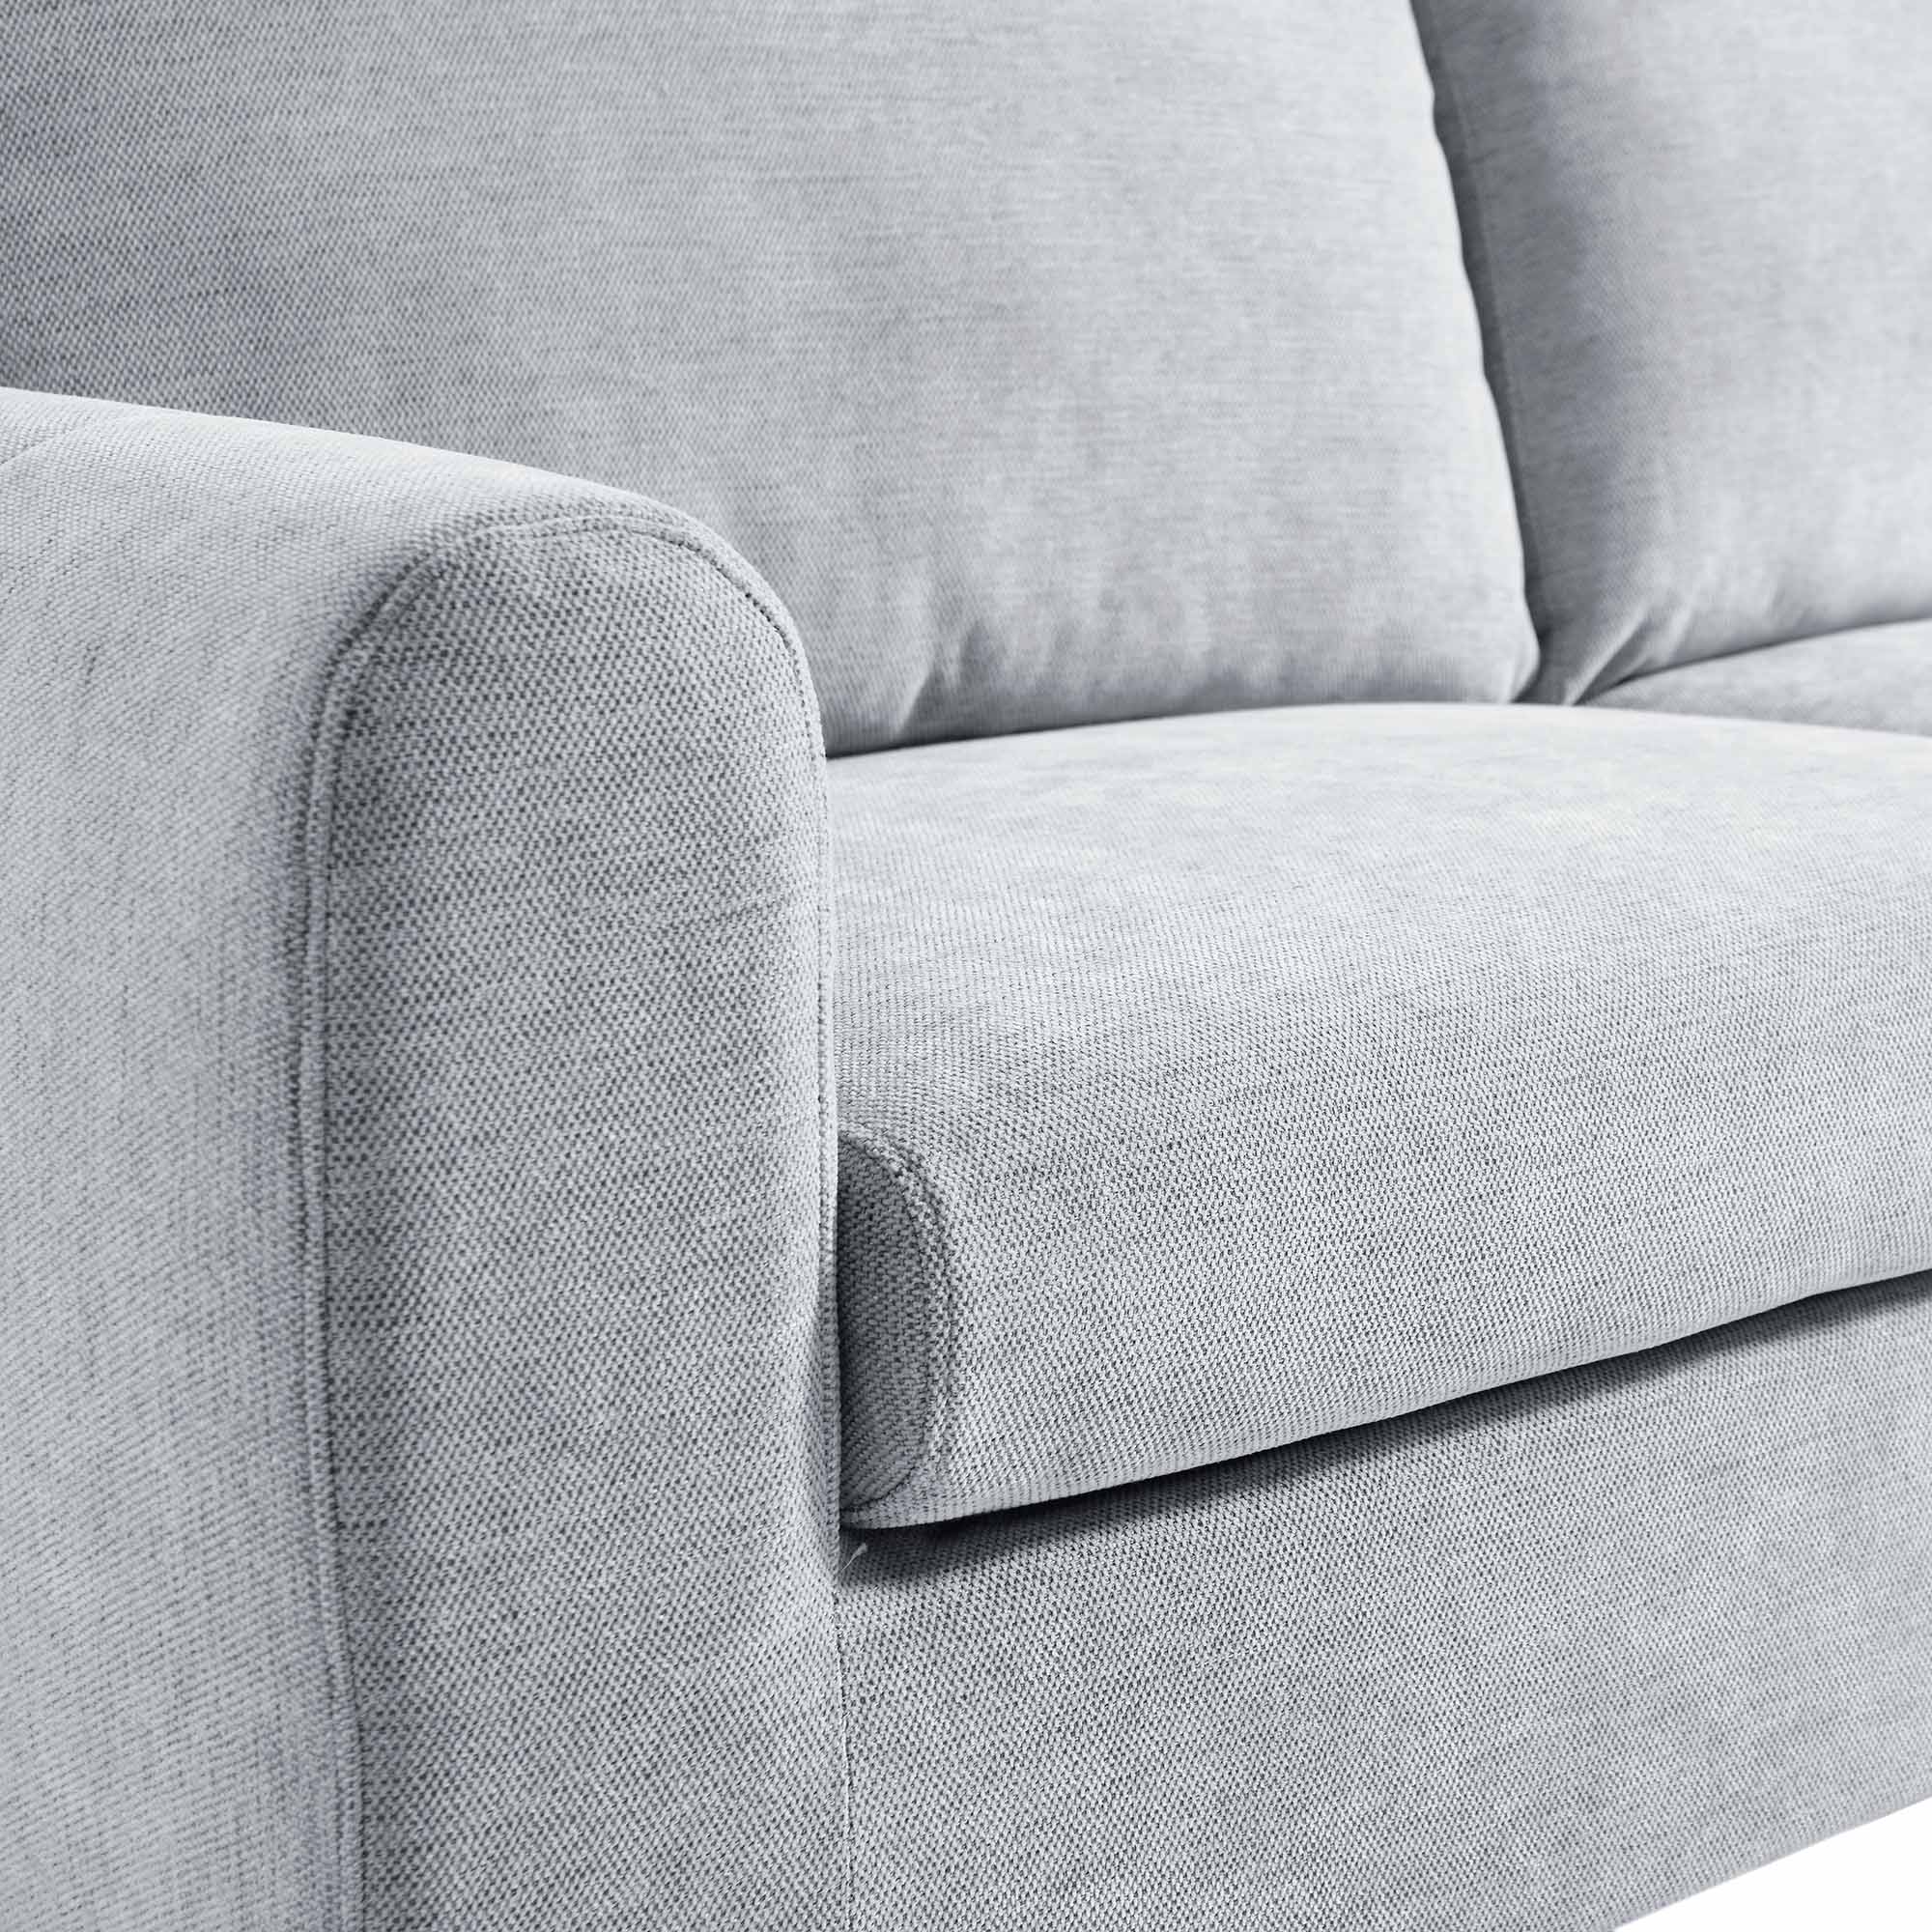 Noak 2-Seater Grey Woven Fabric Sofa with Chrome Legs